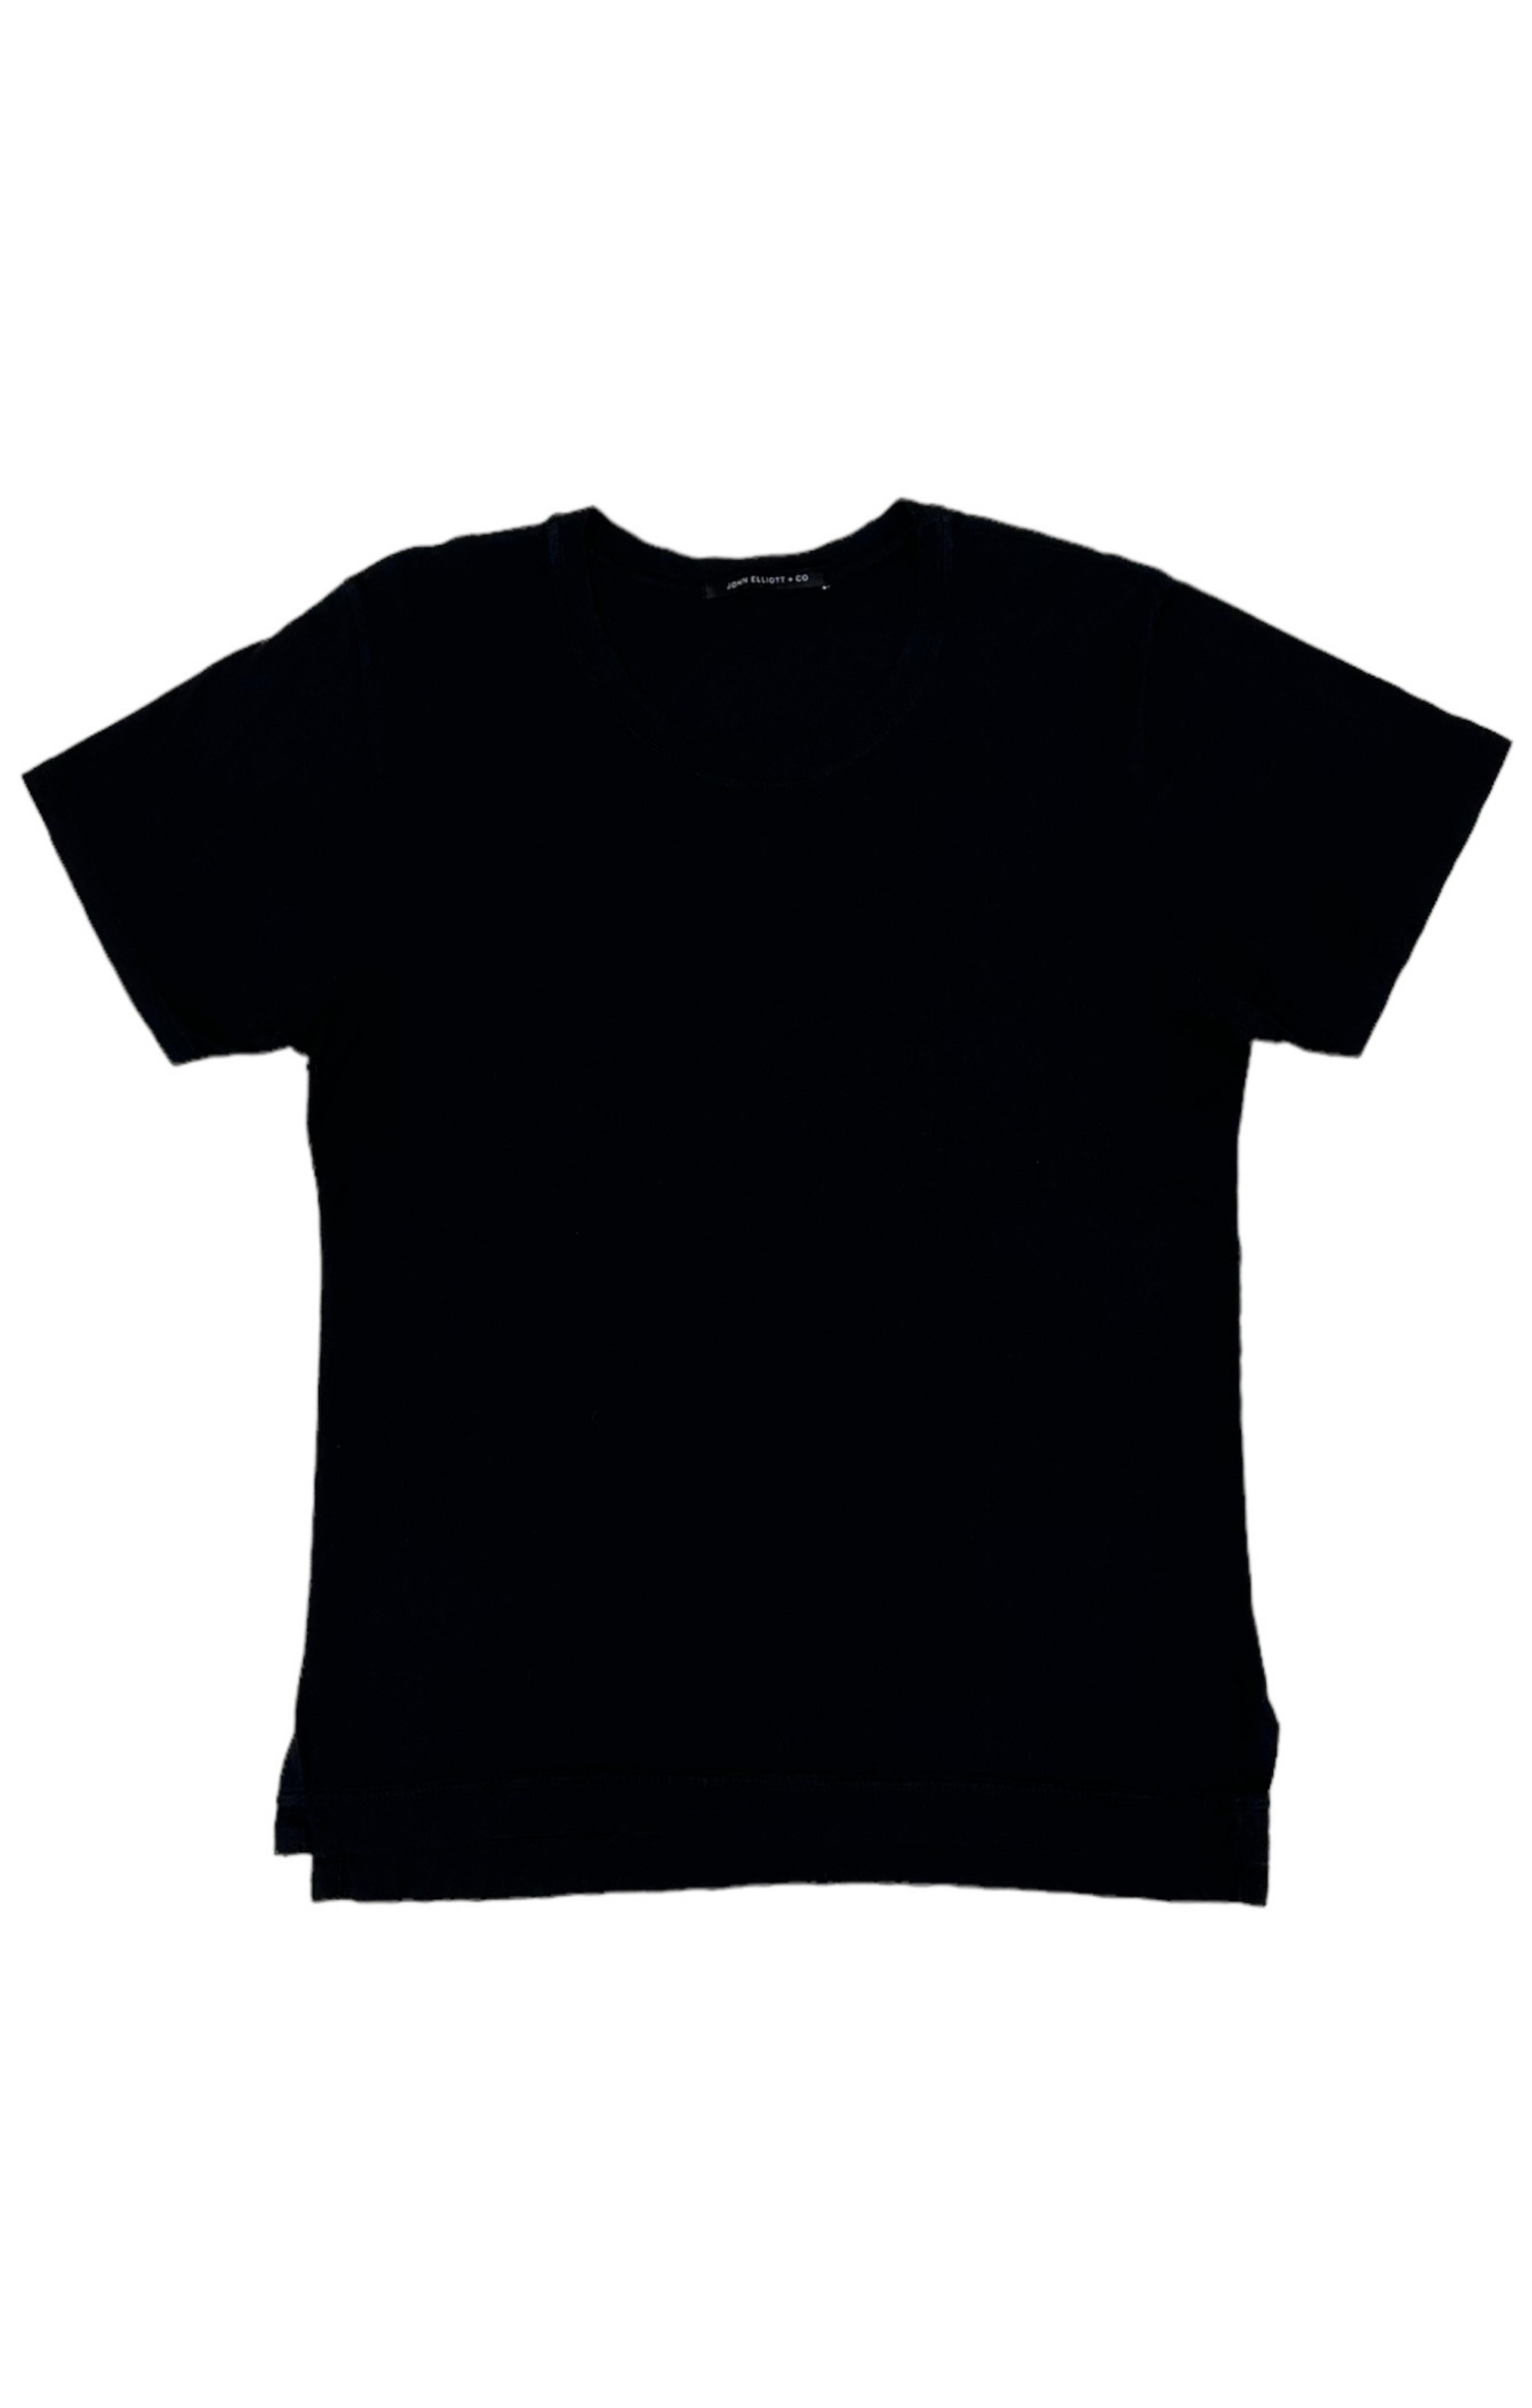 JOHN ELLIOTT T-shirt Size: Marked a size 5, fits like 2XL